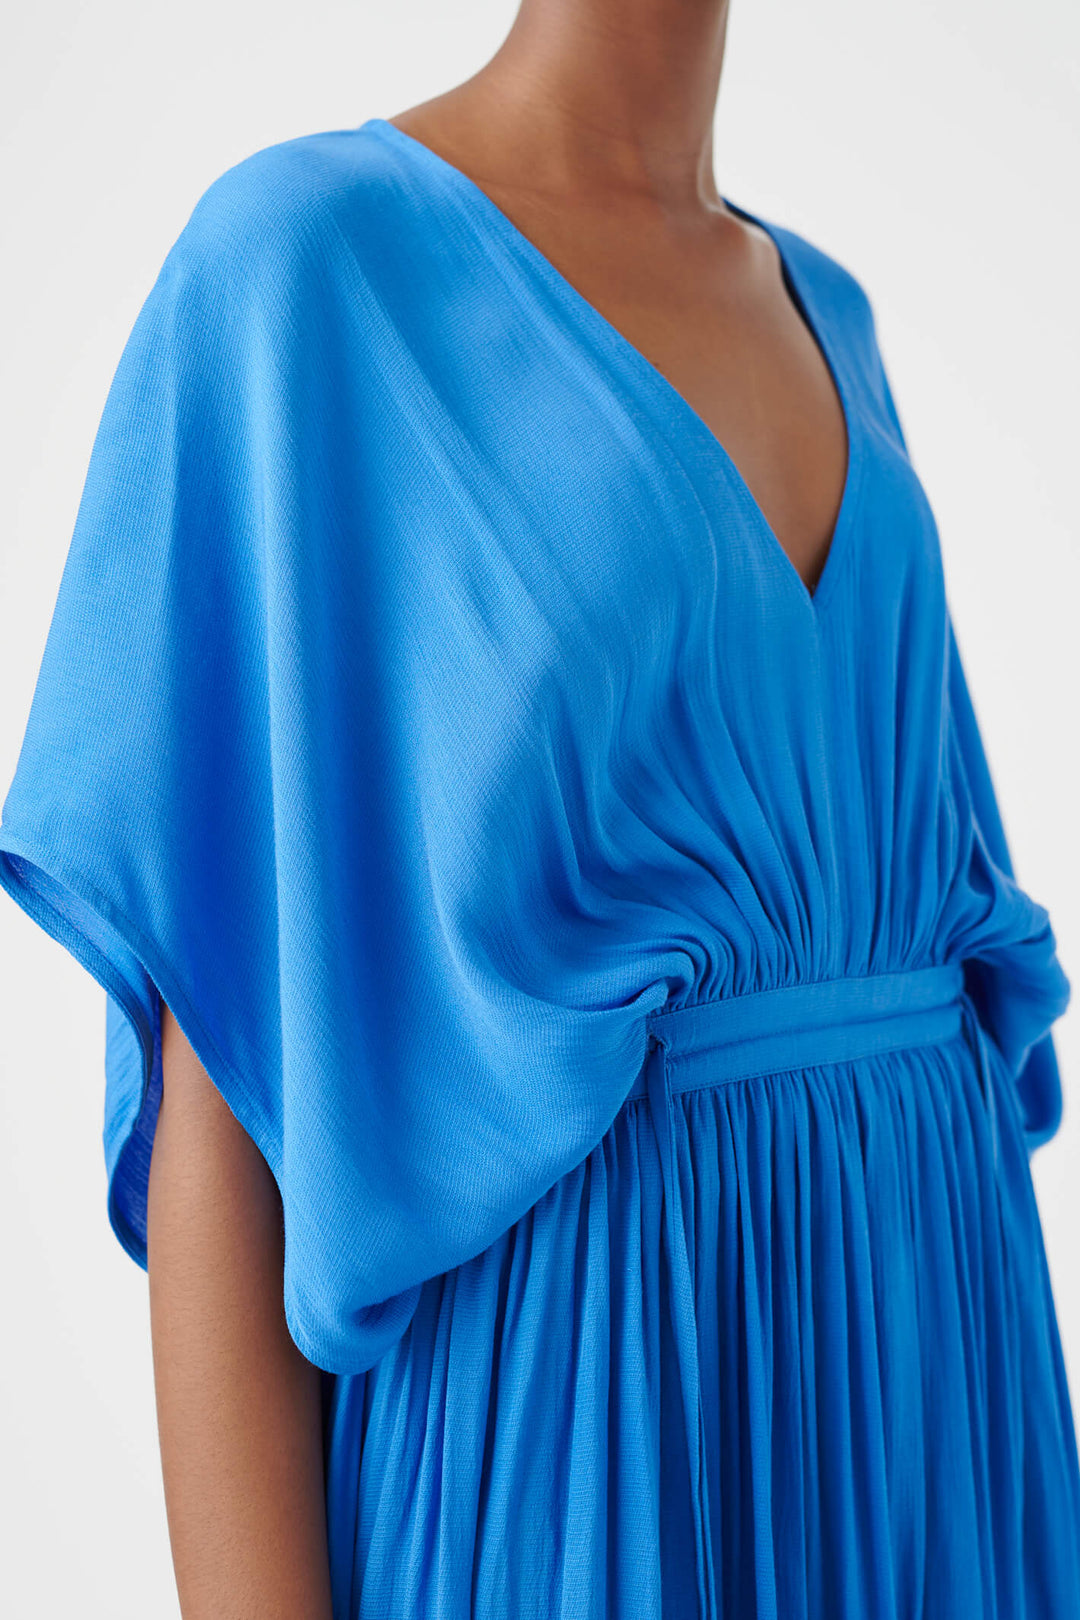 Dea Kudibal Celestine NS 136-0423 Blue Infinity Maxi Dress - Olivia Grace Fashion